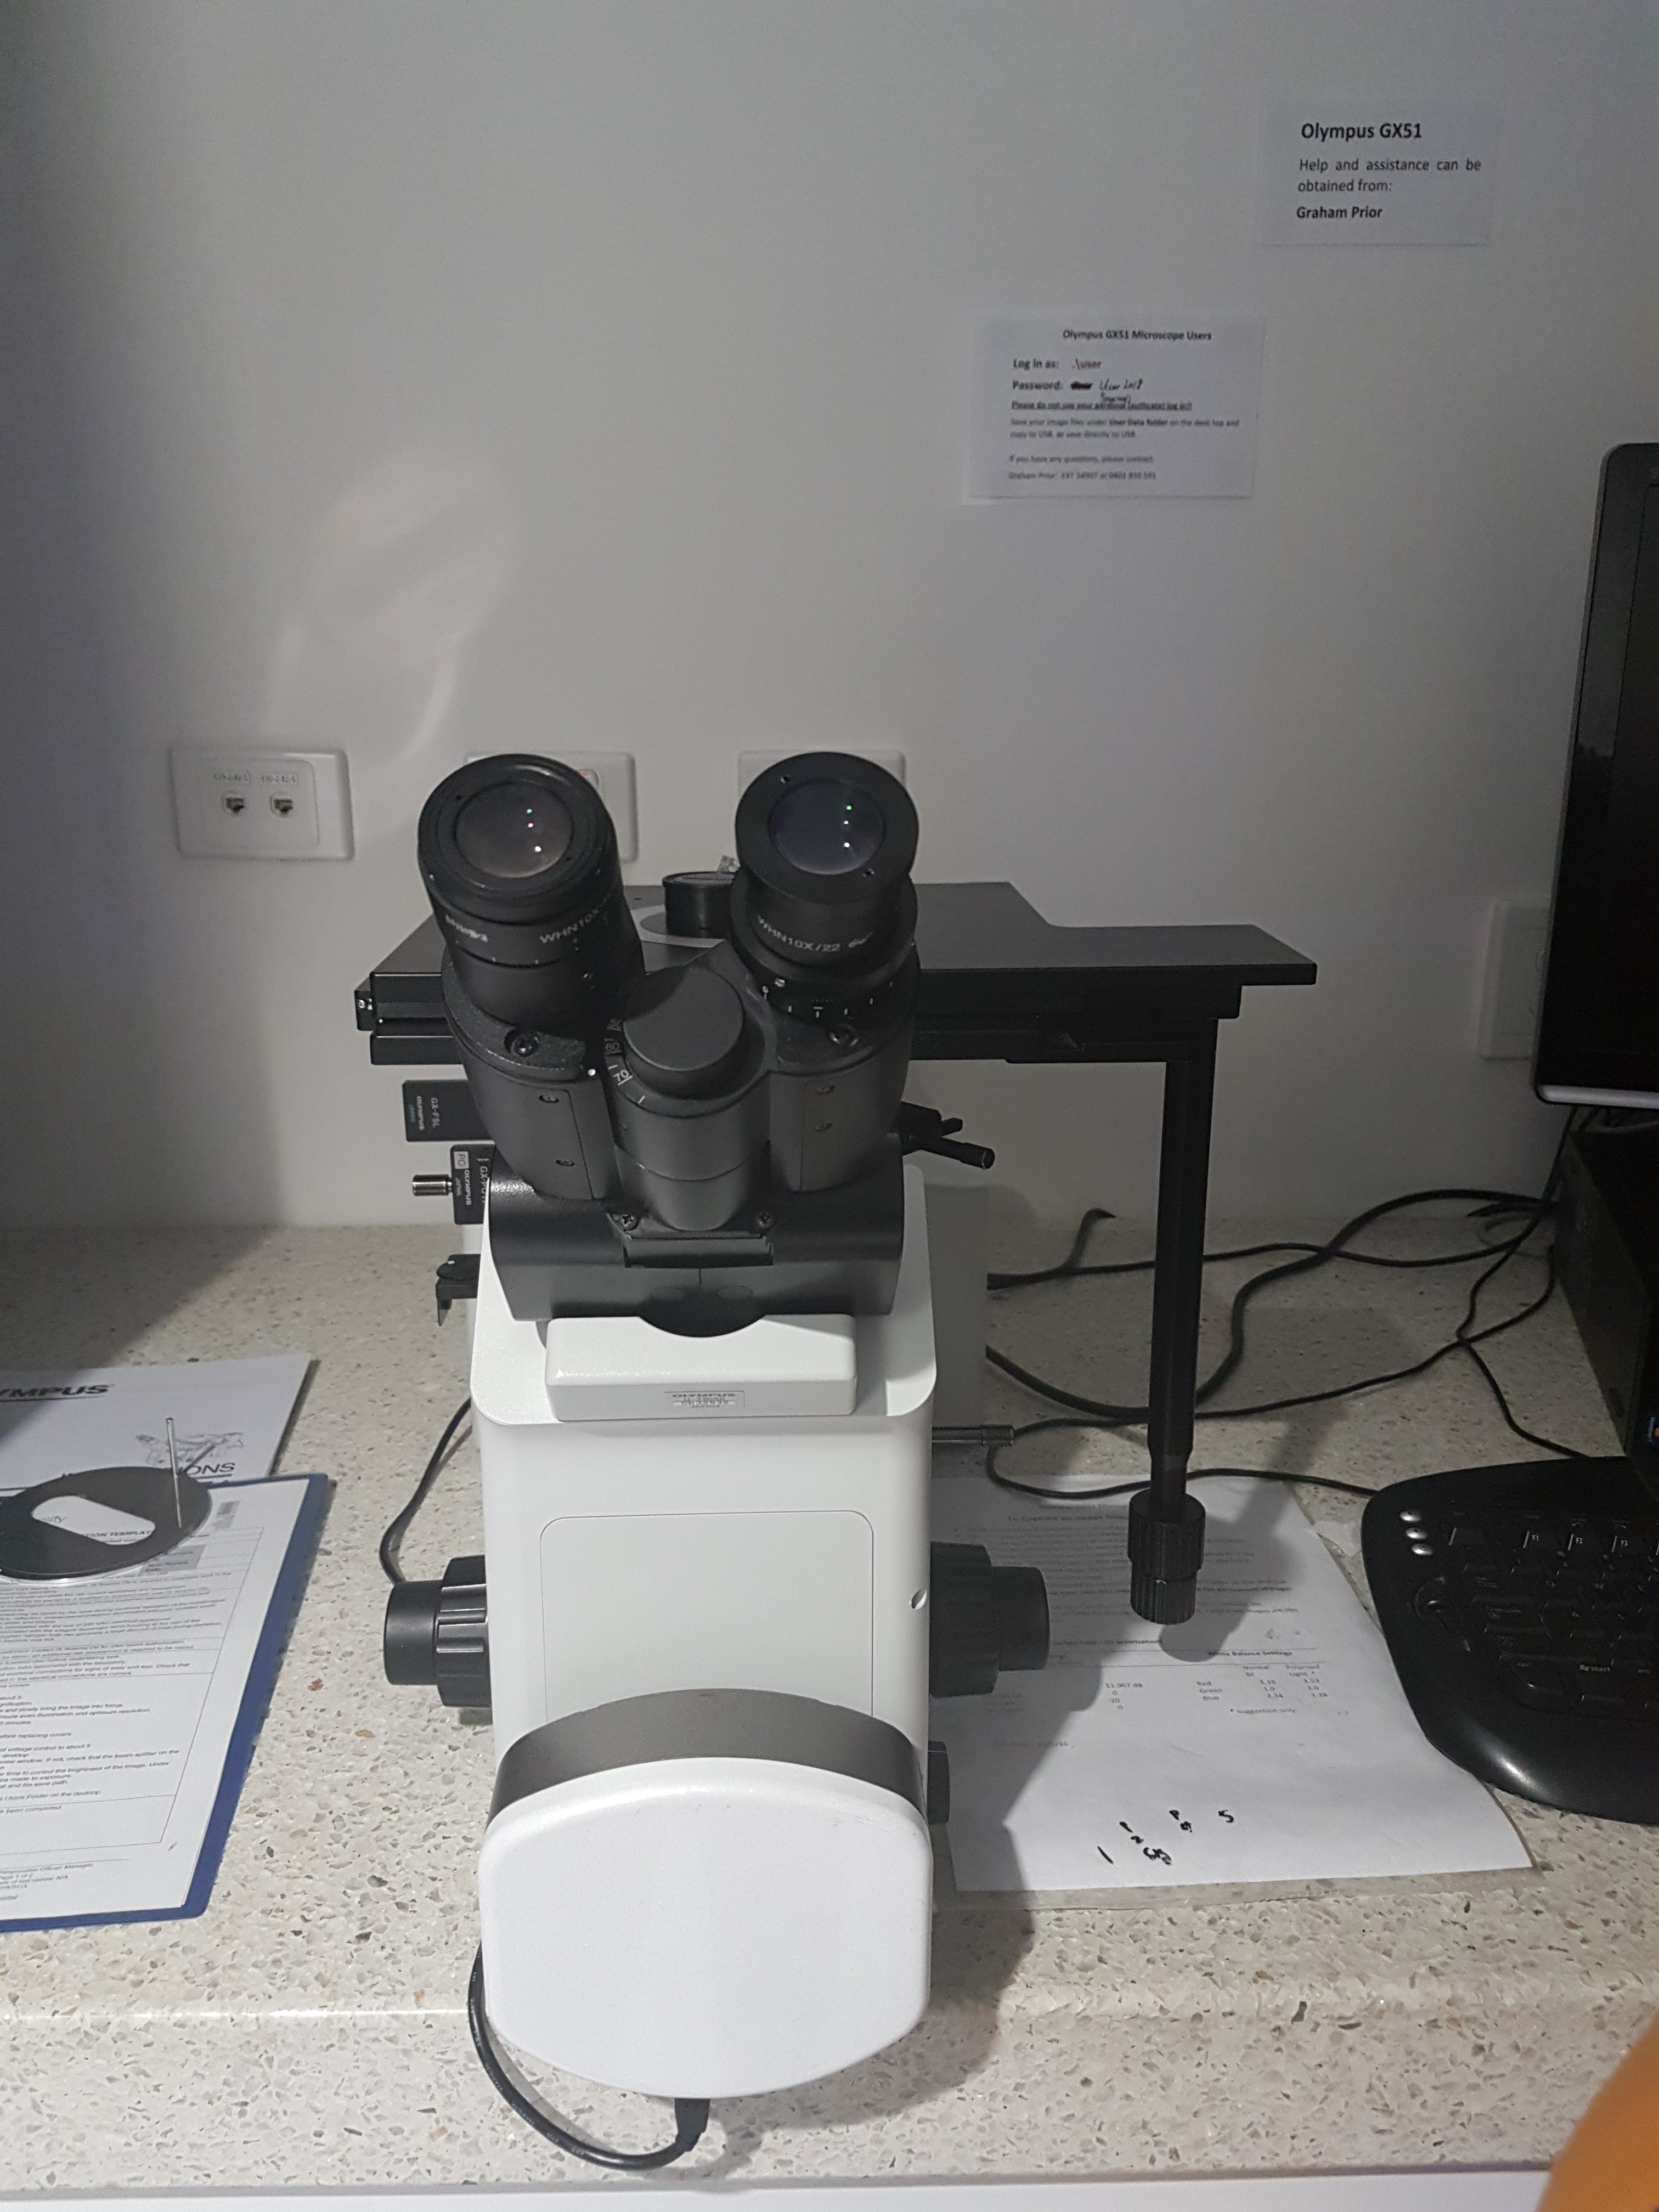 82 - 289 - Optical microscope_Olympus GX51